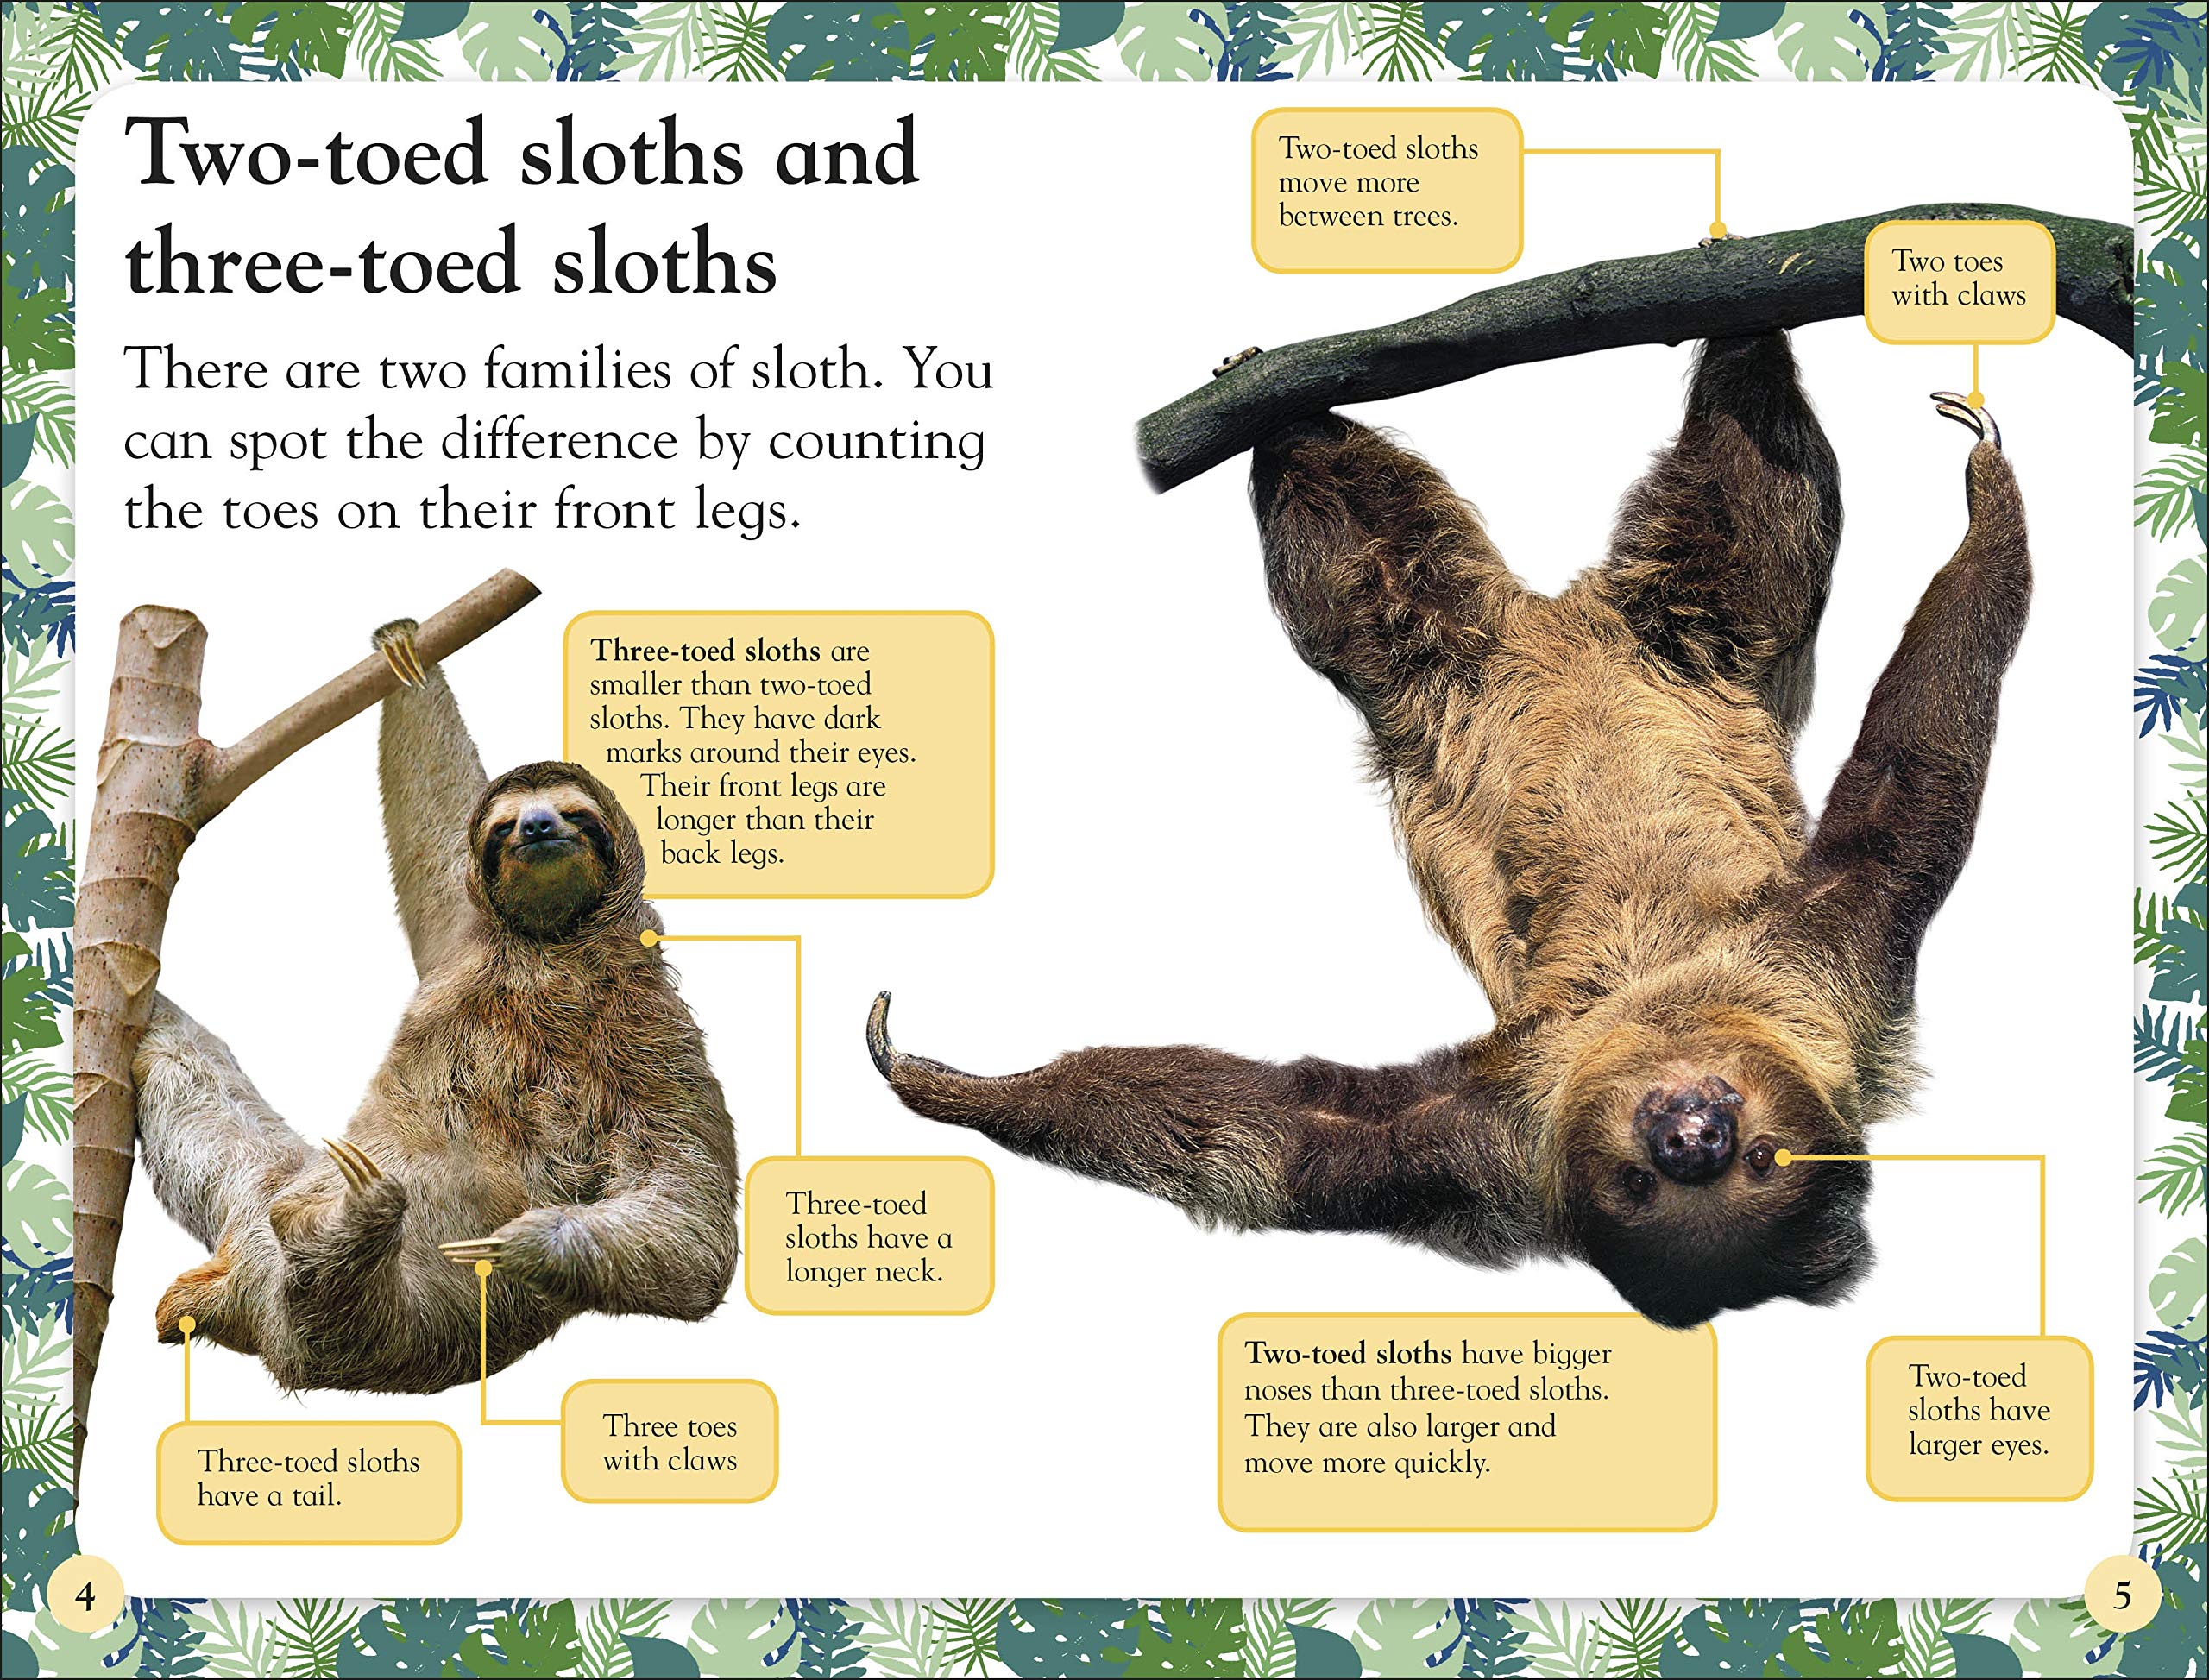 Sloths (DK Readers Level 2)